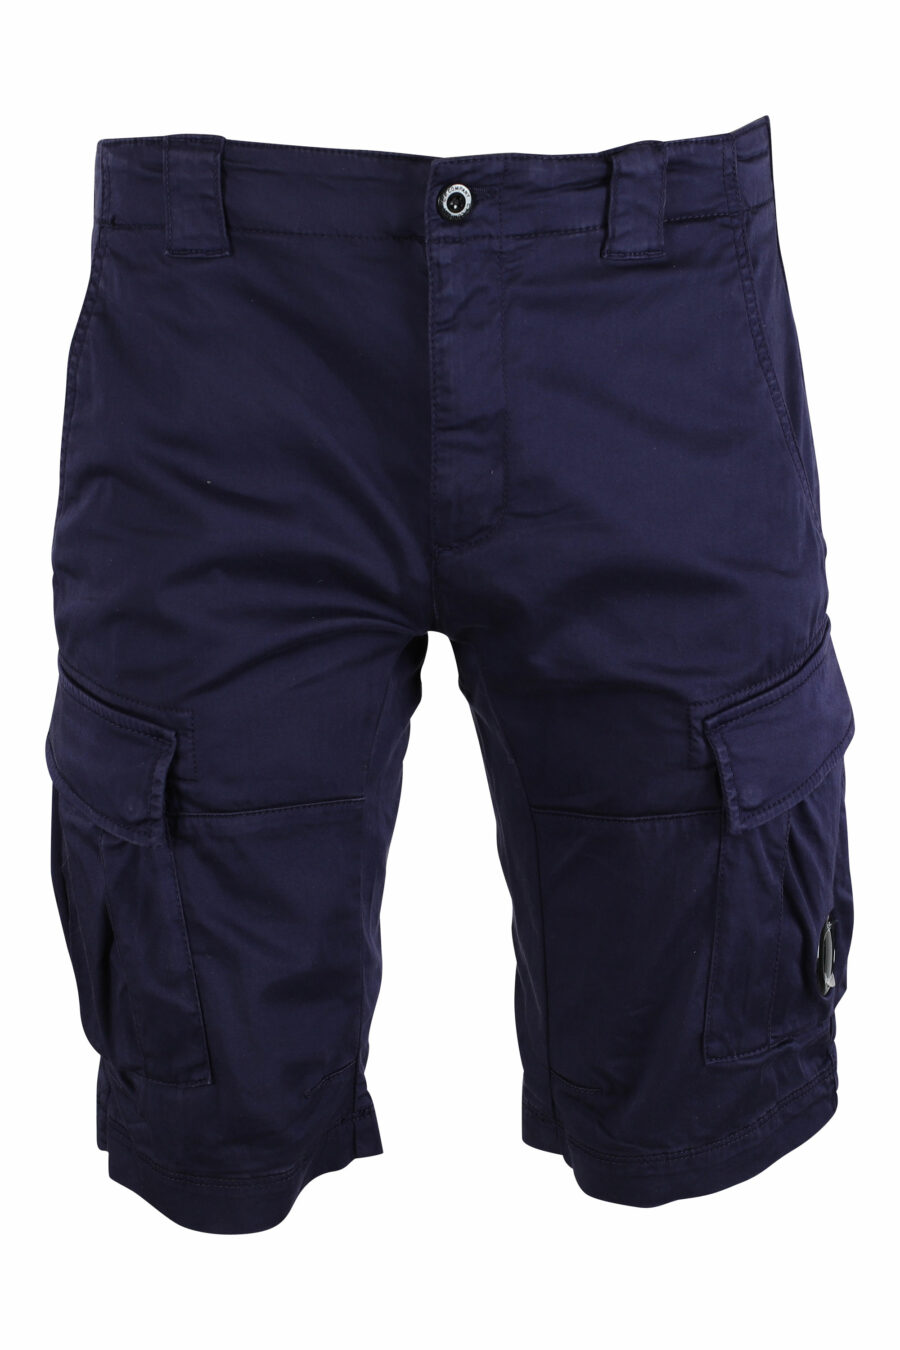 Dunkelblaue Cargo-Shorts mit rundem Mini-Logo - IMG 9489